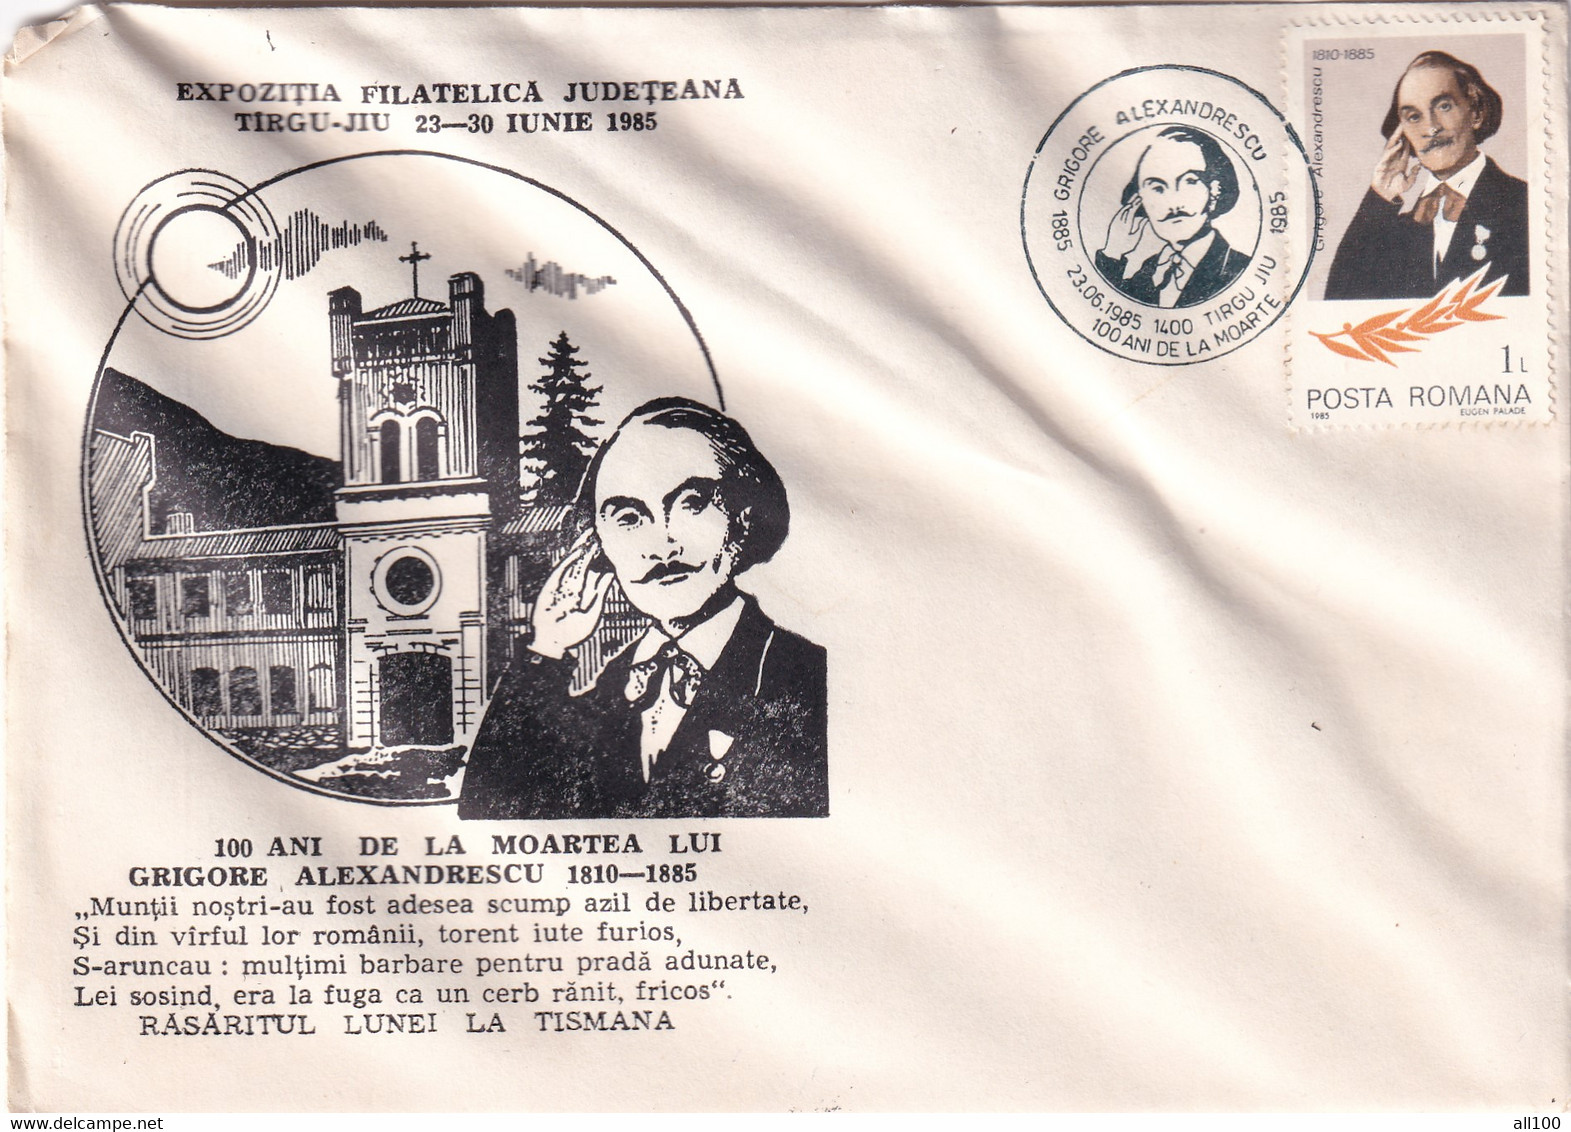 A21940 - Expozitia Filatelica Judeteana Targu Jiu Grigore Alexandrescu Cover Envelope Used 1985 RSR Stamp Aniversare - Covers & Documents